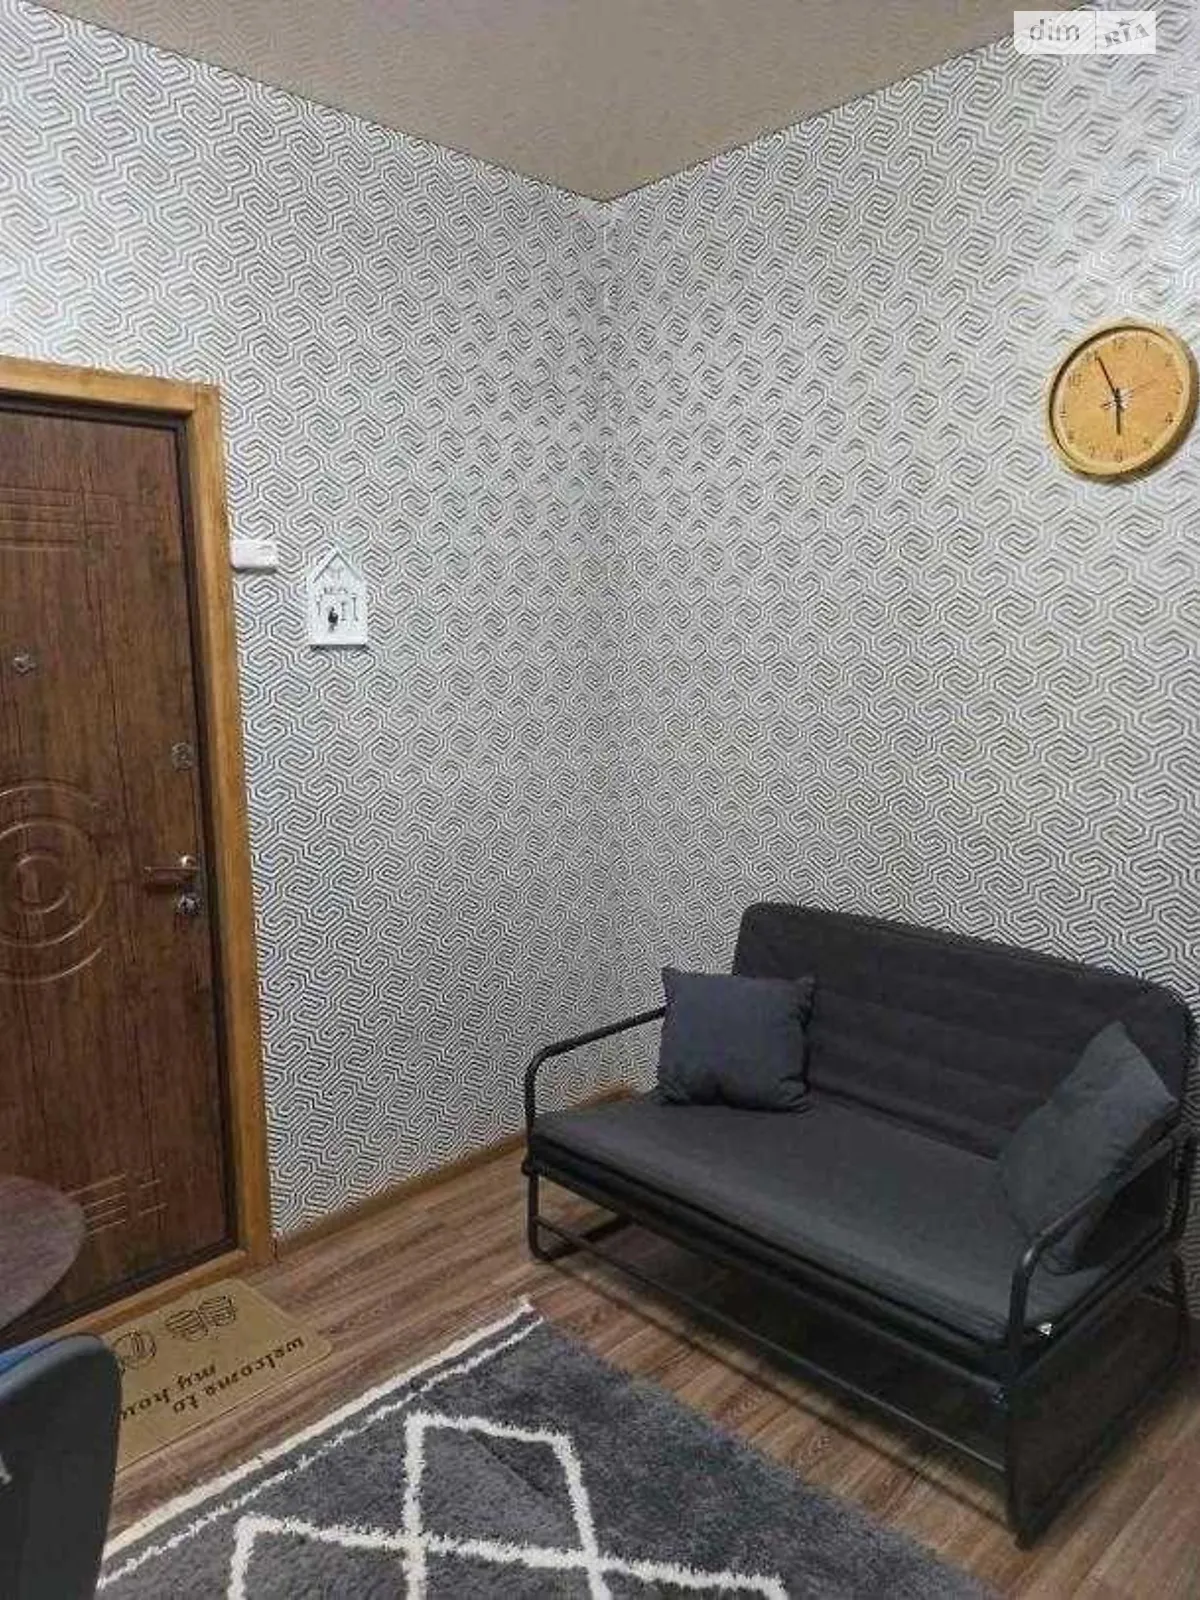 Продается комната 17 кв. м в Харькове - фото 3